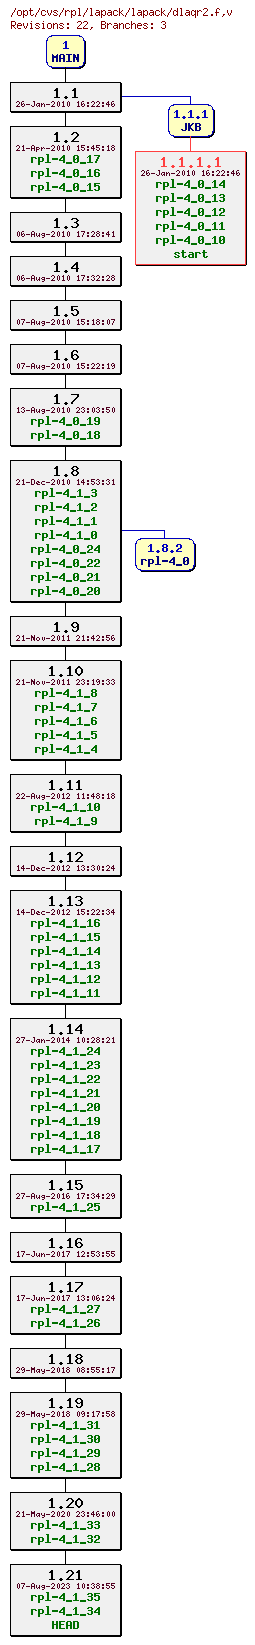 Revision graph of rpl/lapack/lapack/dlaqr2.f